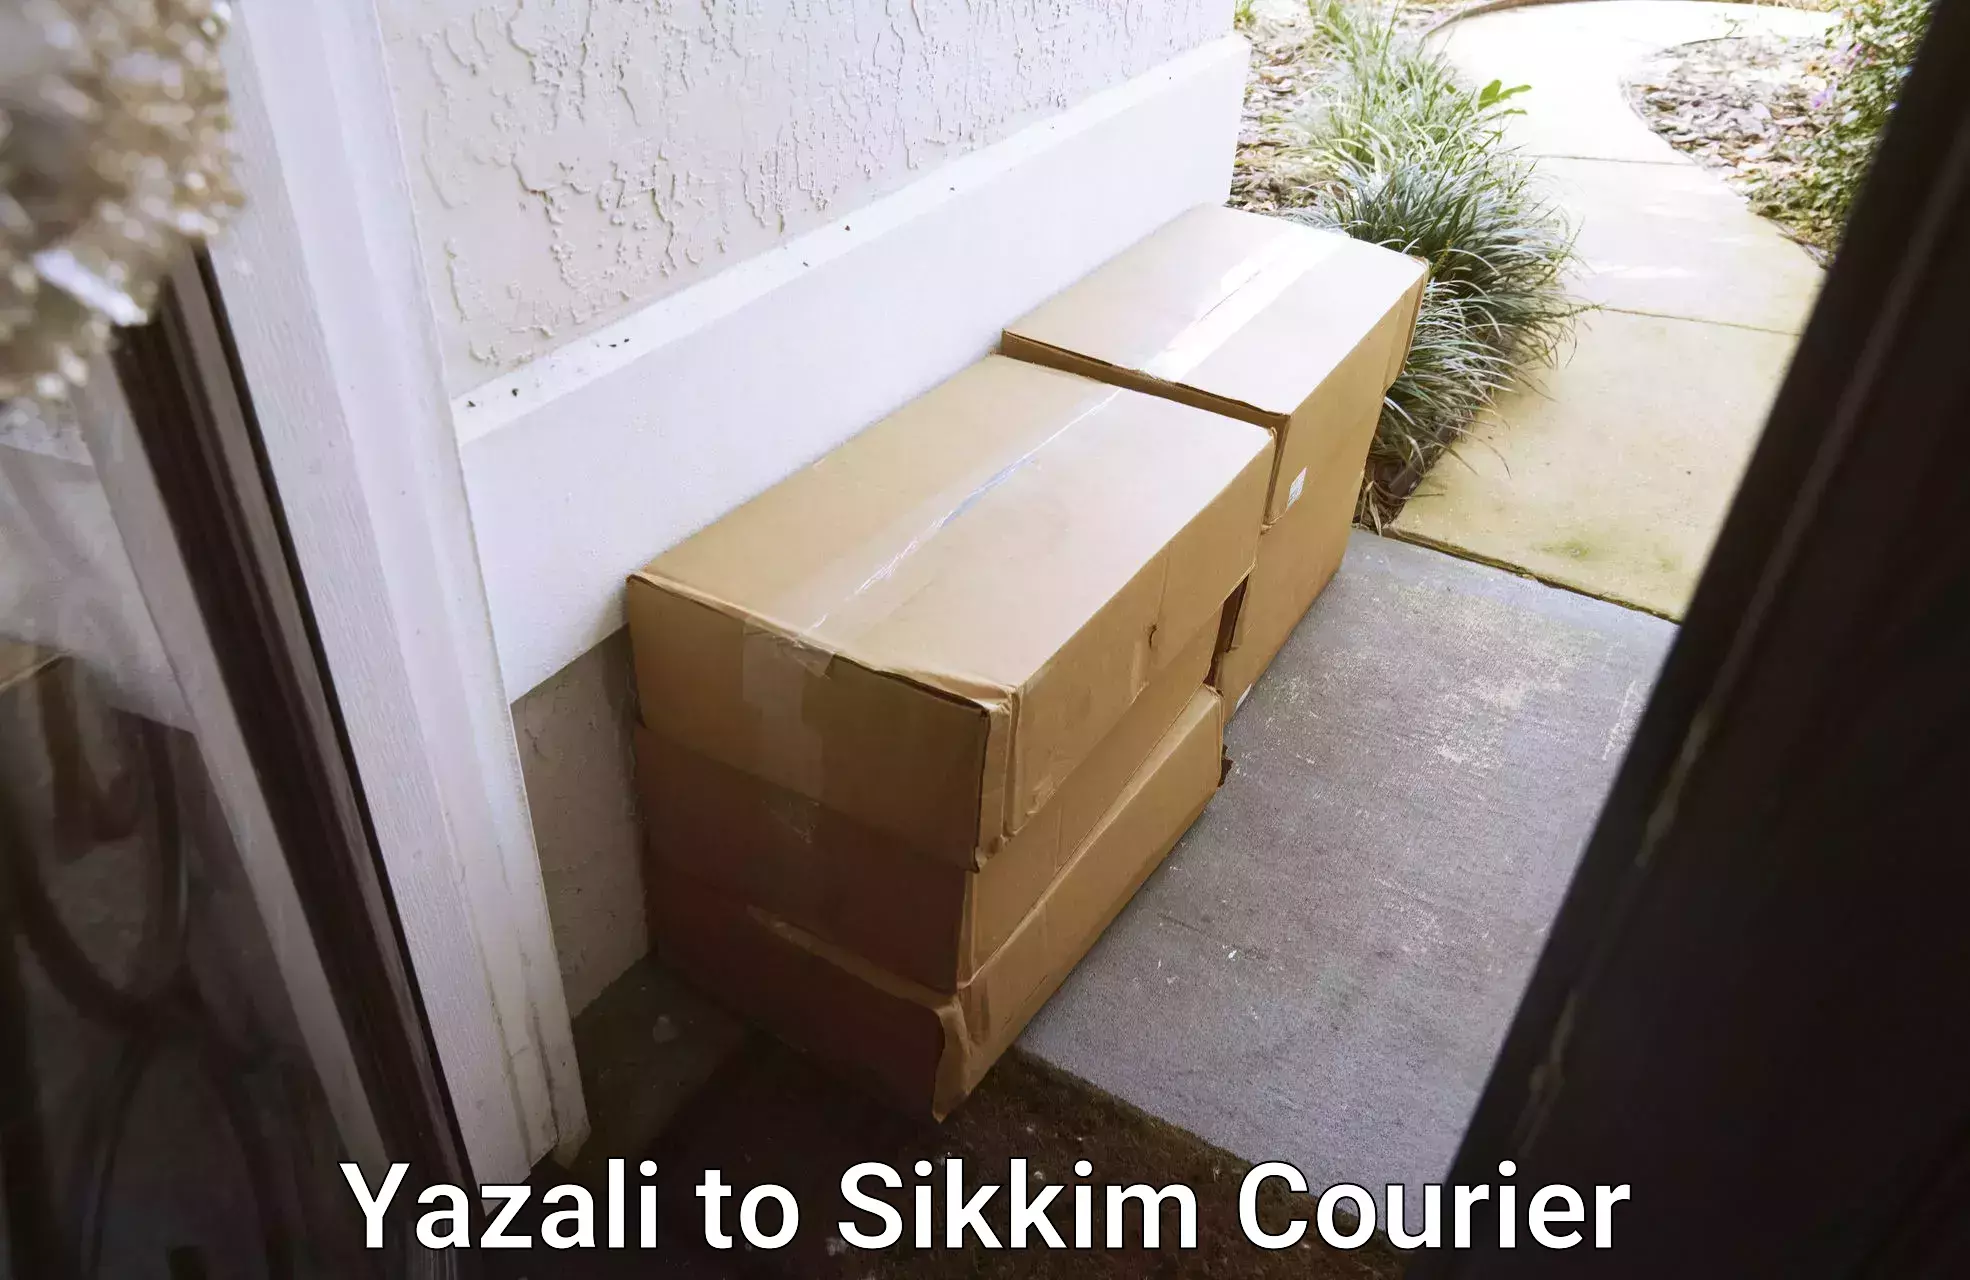 Seamless shipping experience Yazali to North Sikkim